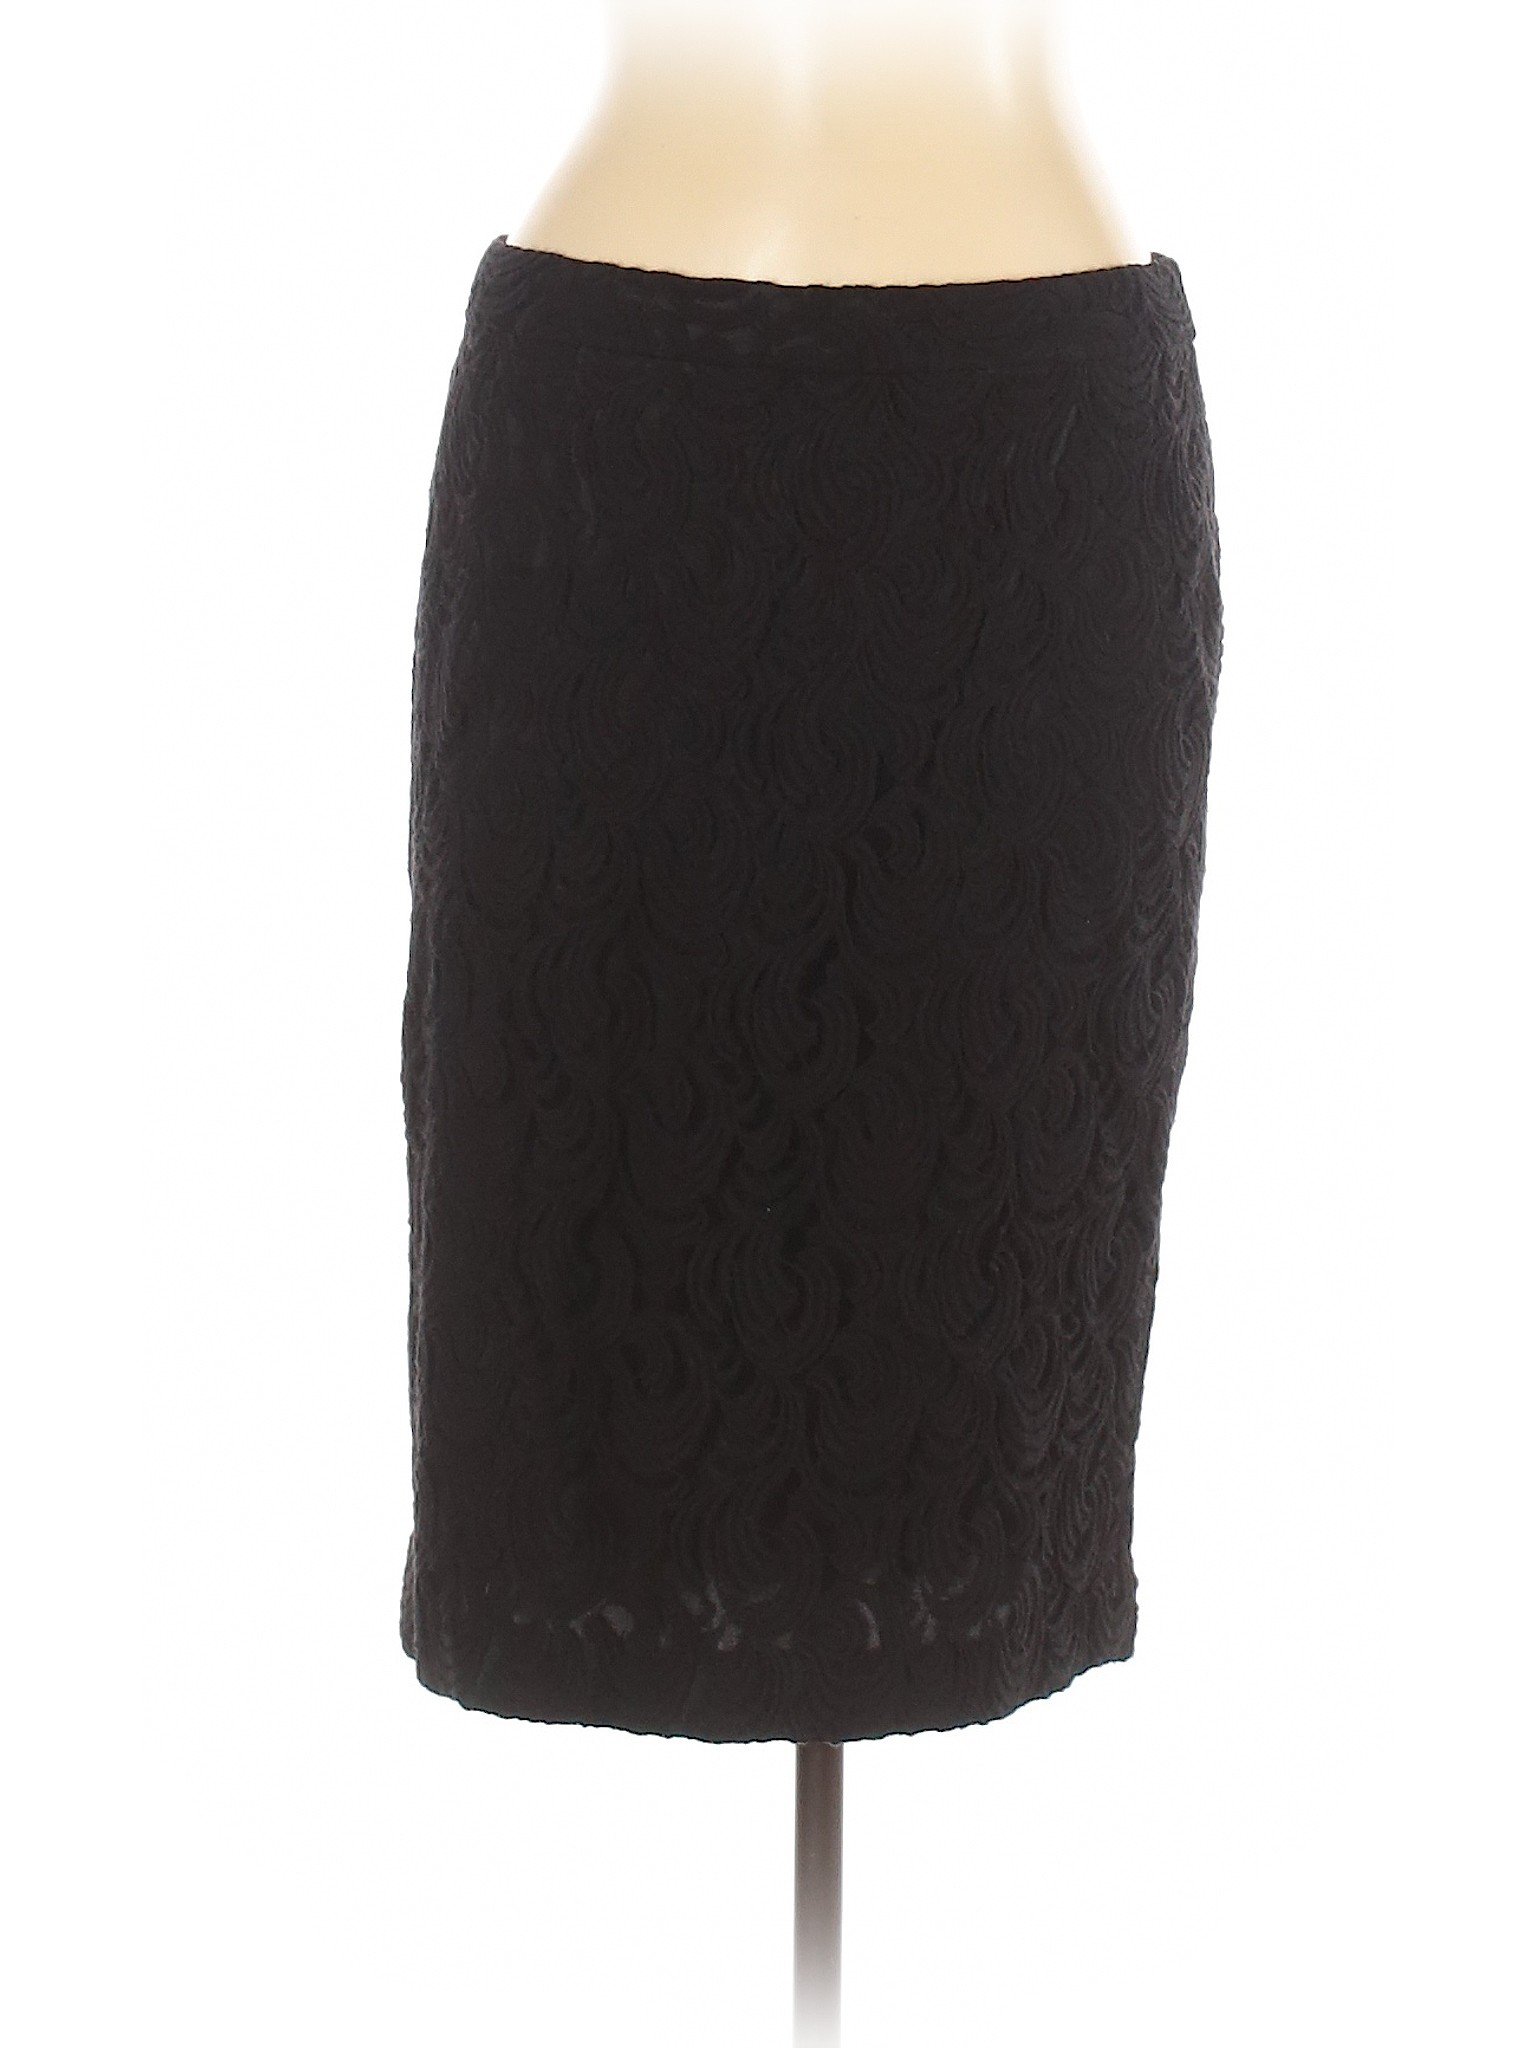 Lord & Taylor Women Black Casual Skirt 12 | eBay